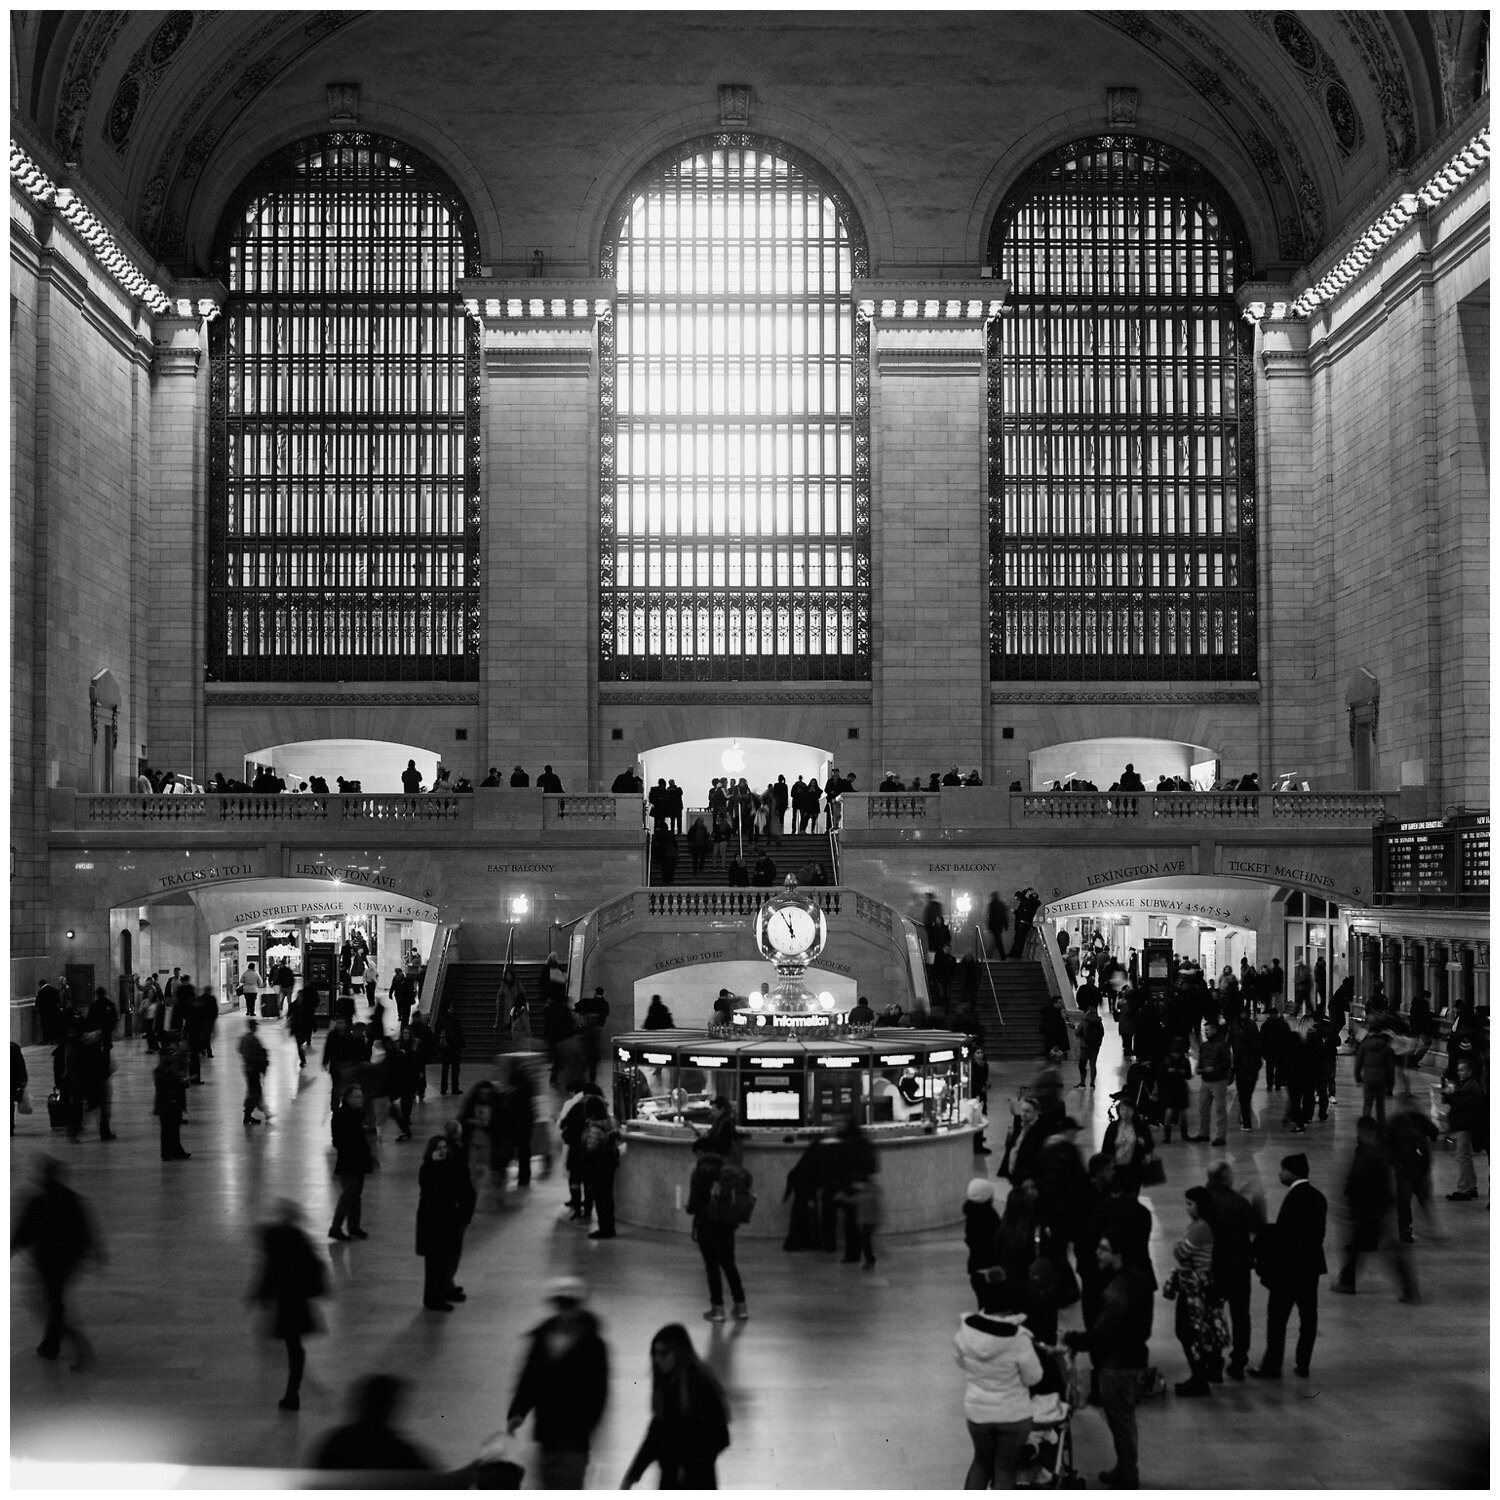 grand central station long exposure on black and white film.jpg